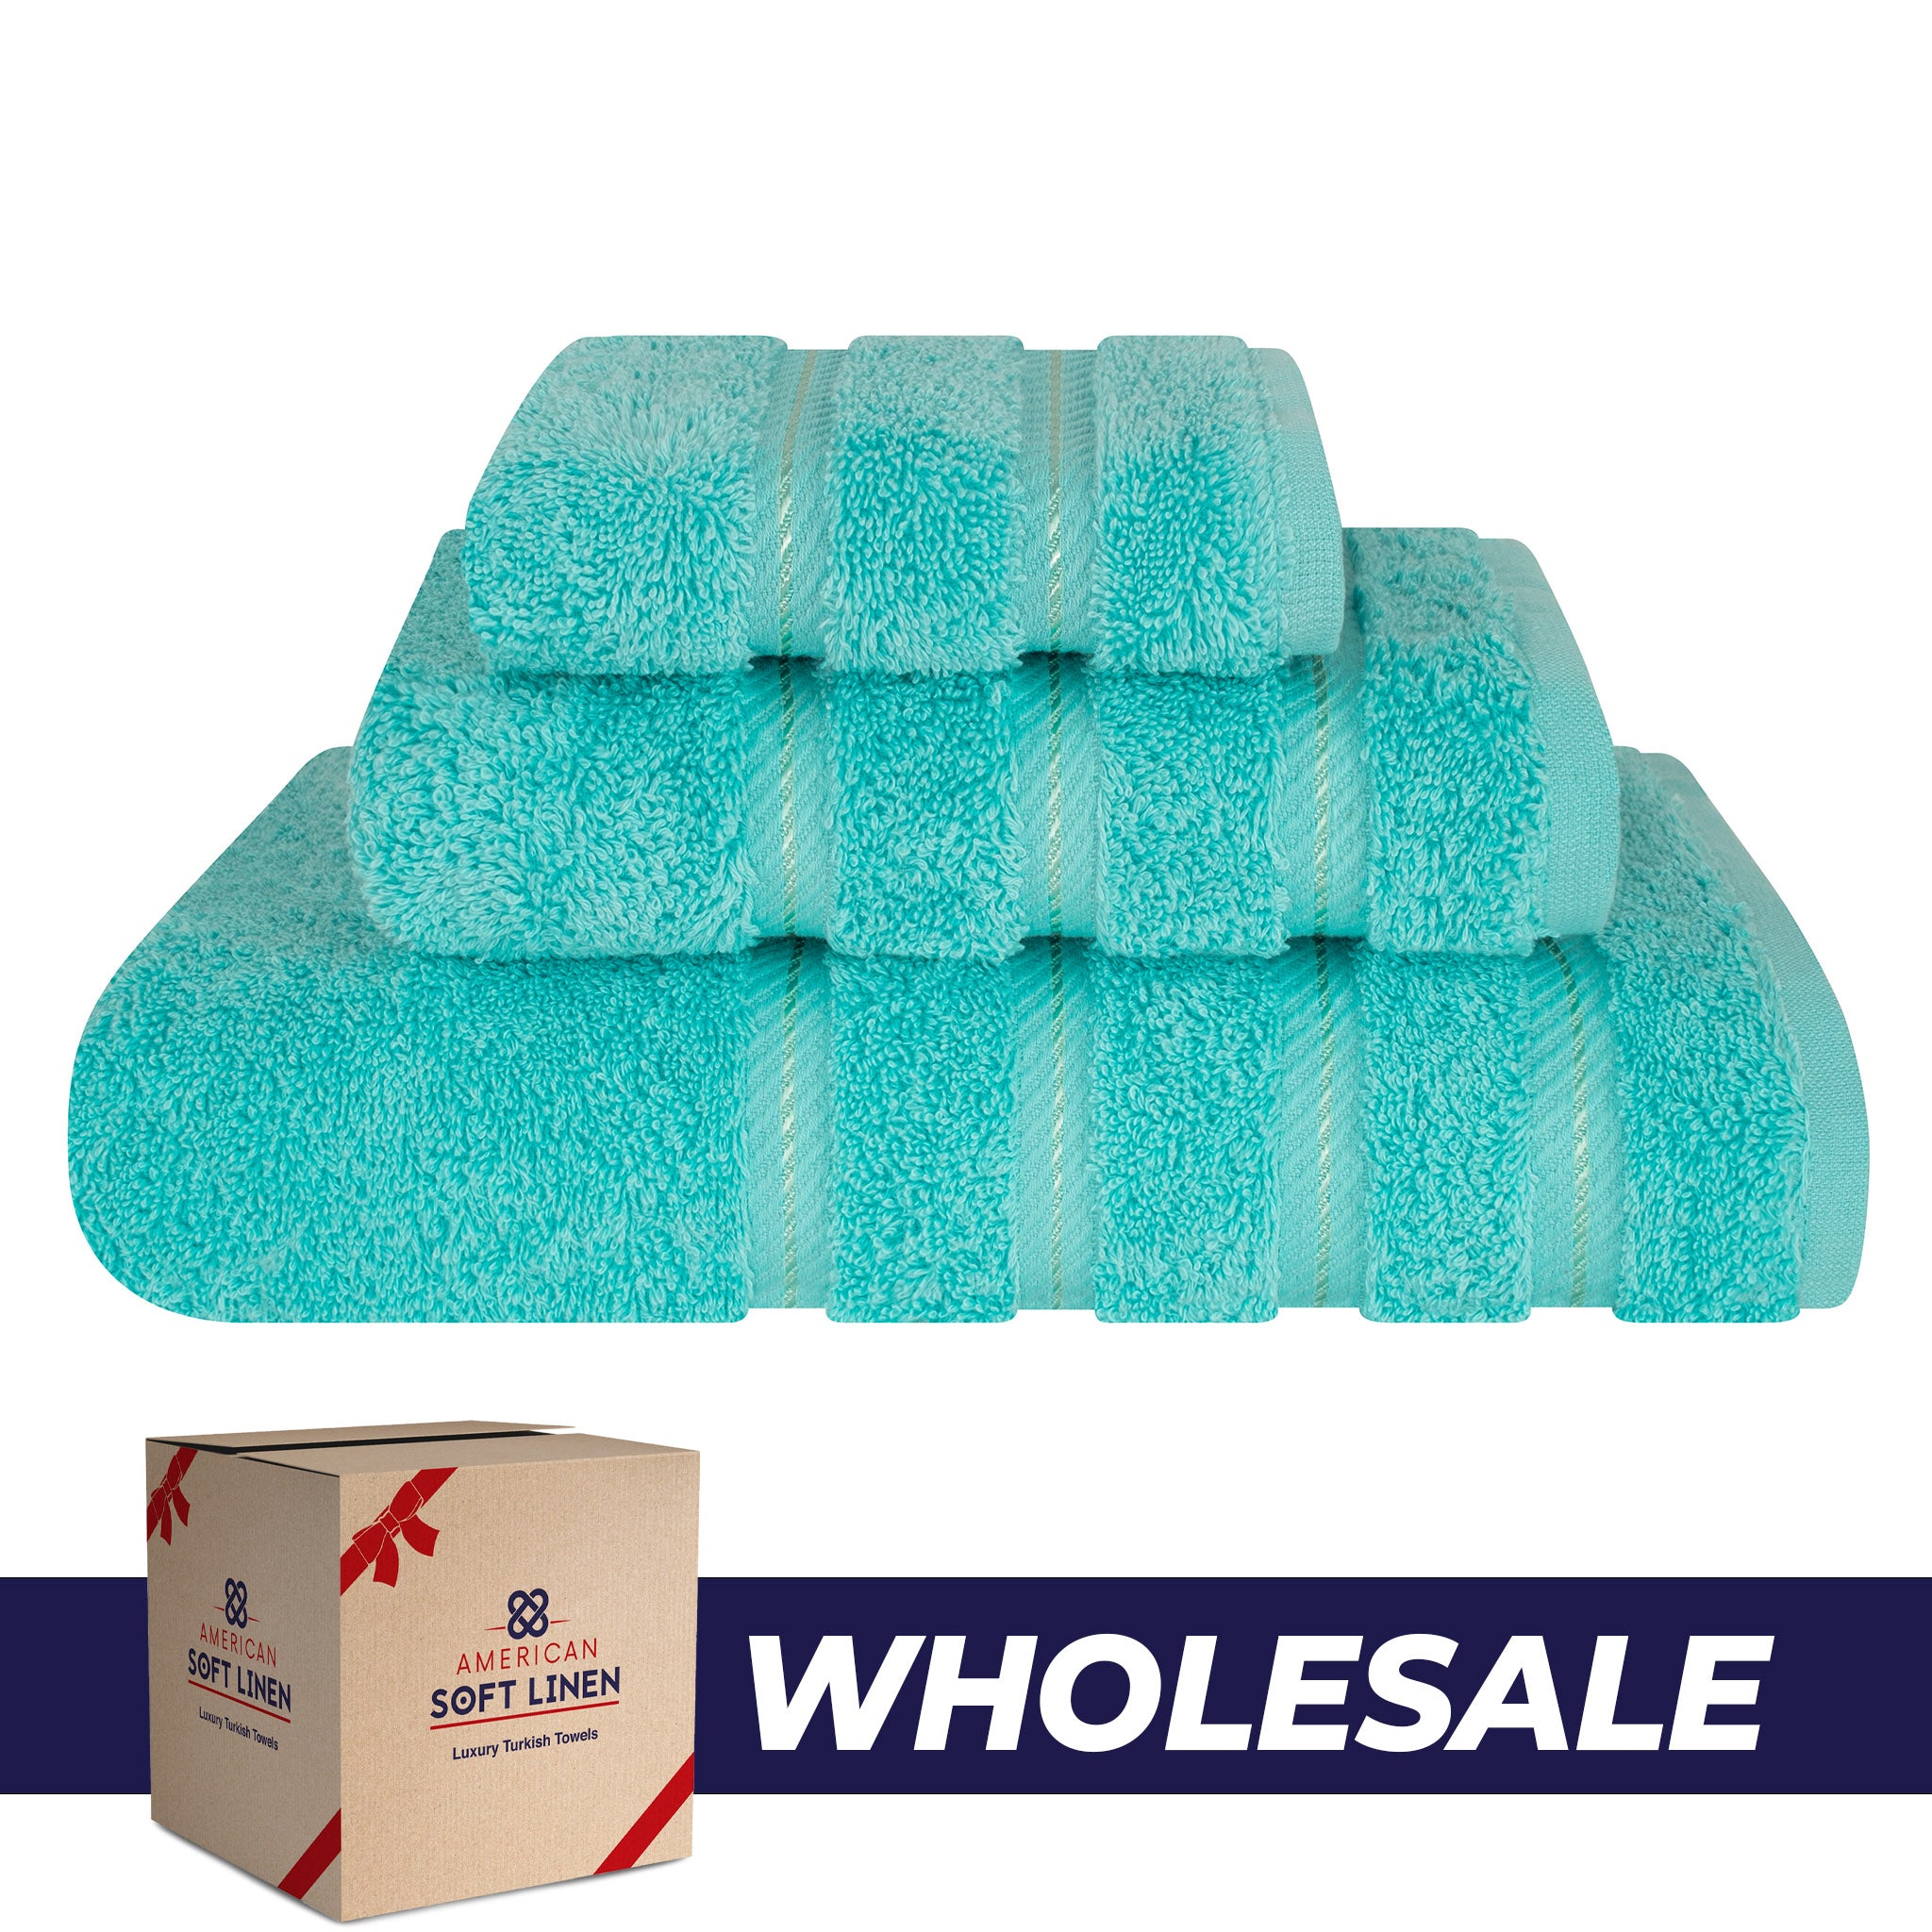 American Soft Linen 3 Piece Luxury Hotel Towel Set 20 set case pack turquoise-blue-0